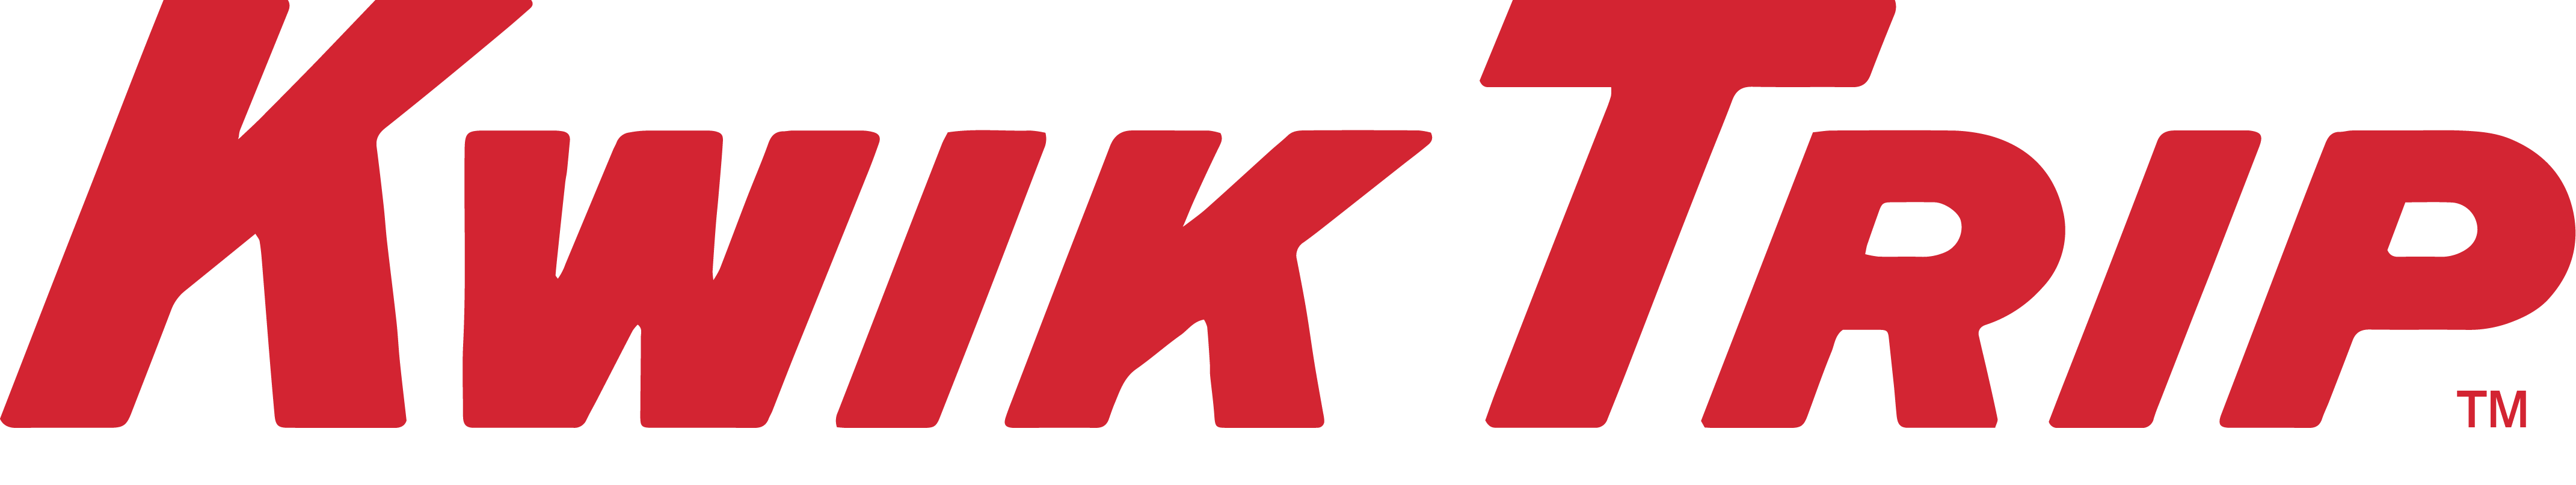 Kwik Trip Sponser Logo